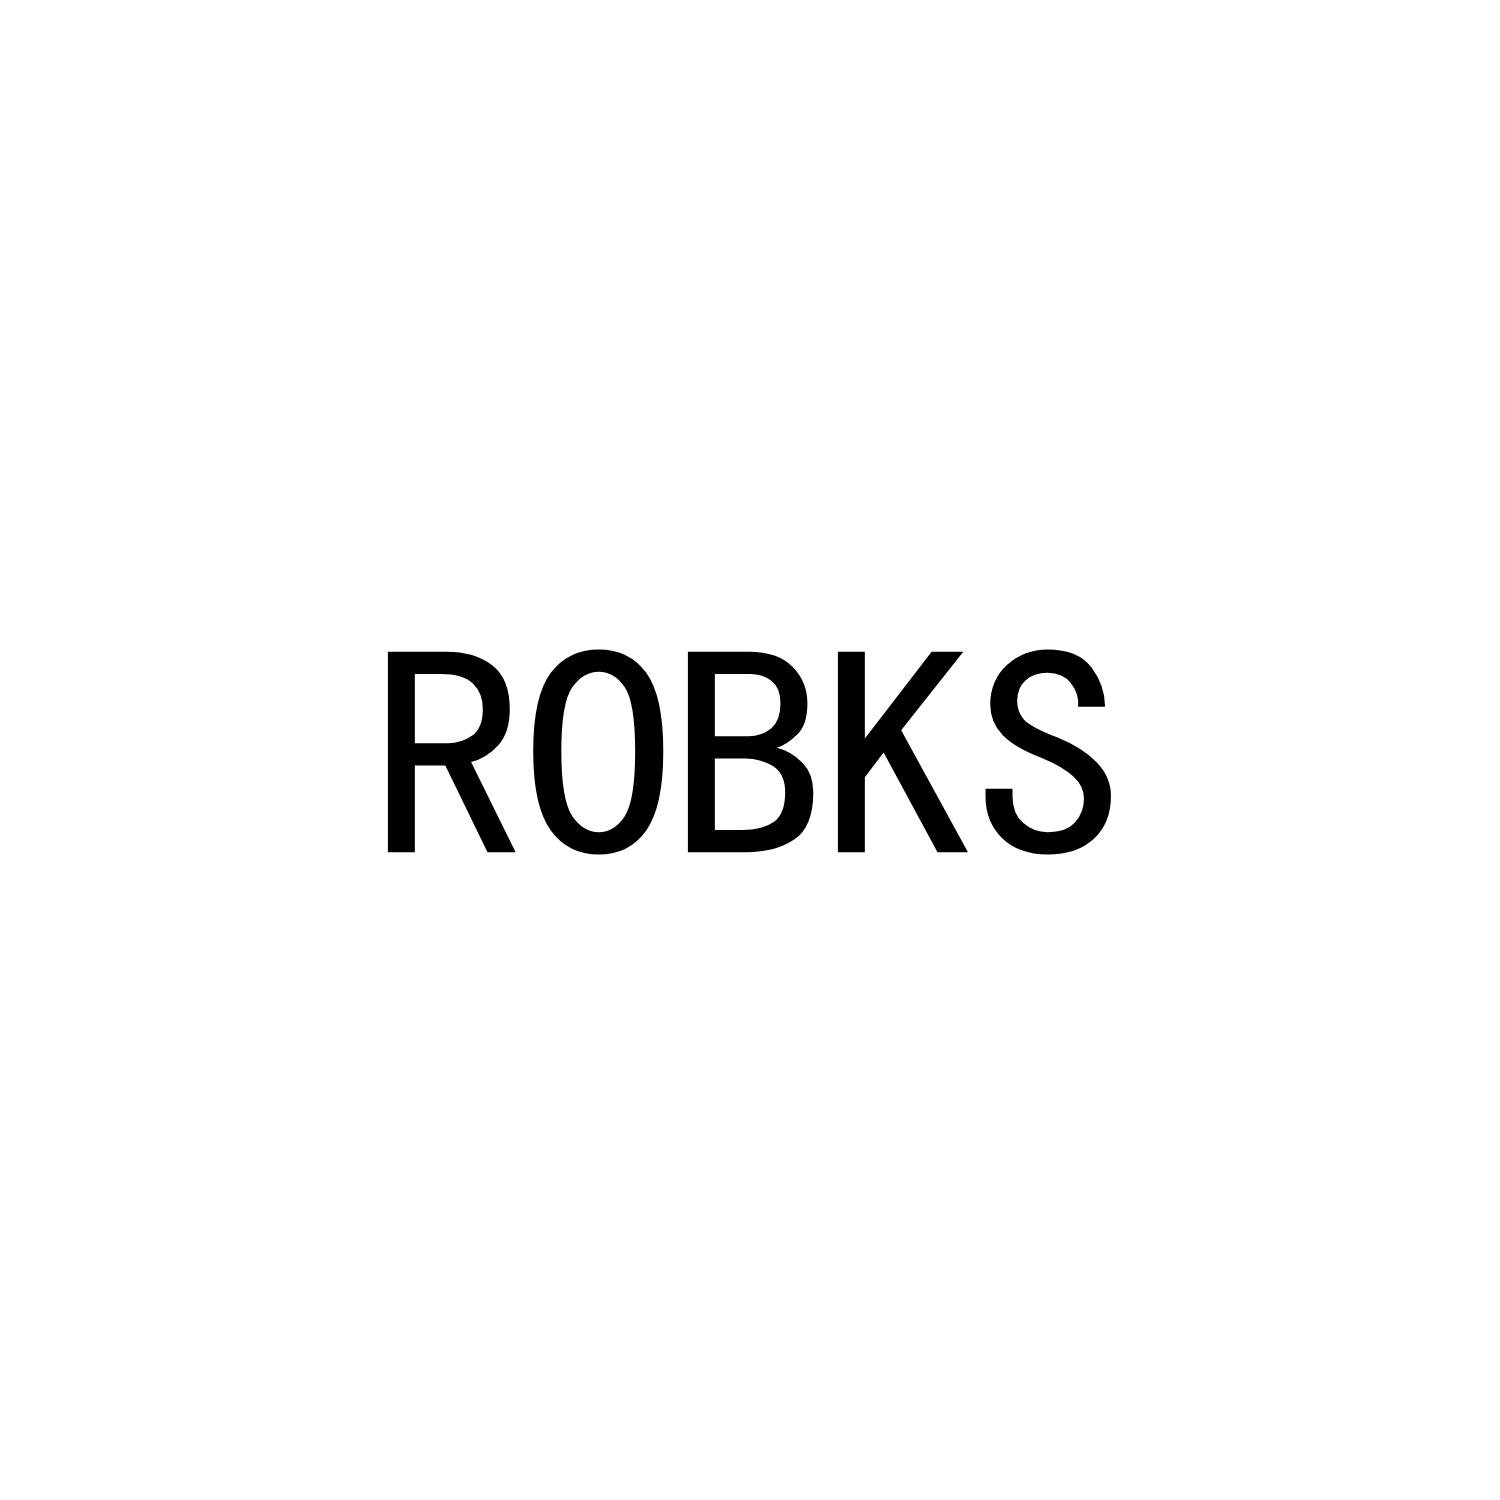 ROBKS